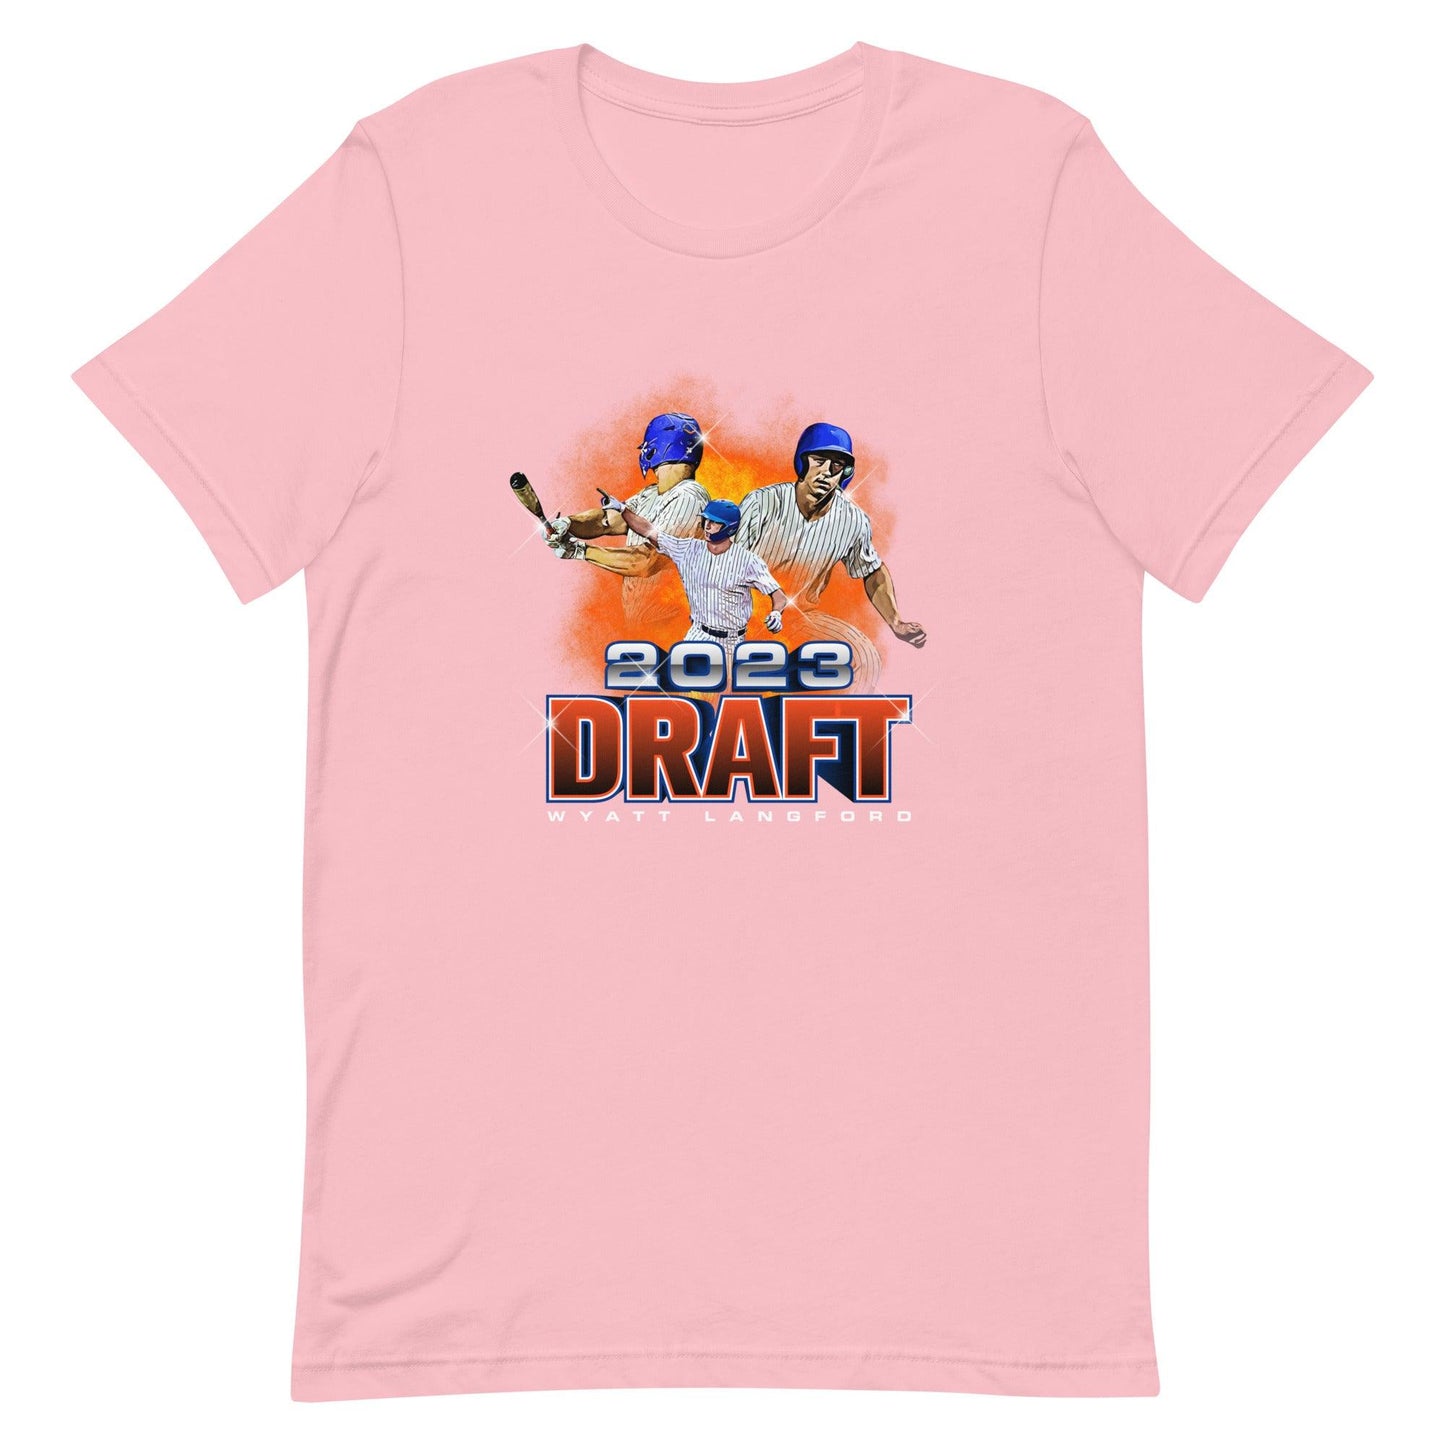 Wyatt Langford "MLB Draft" t-shirt - Fan Arch